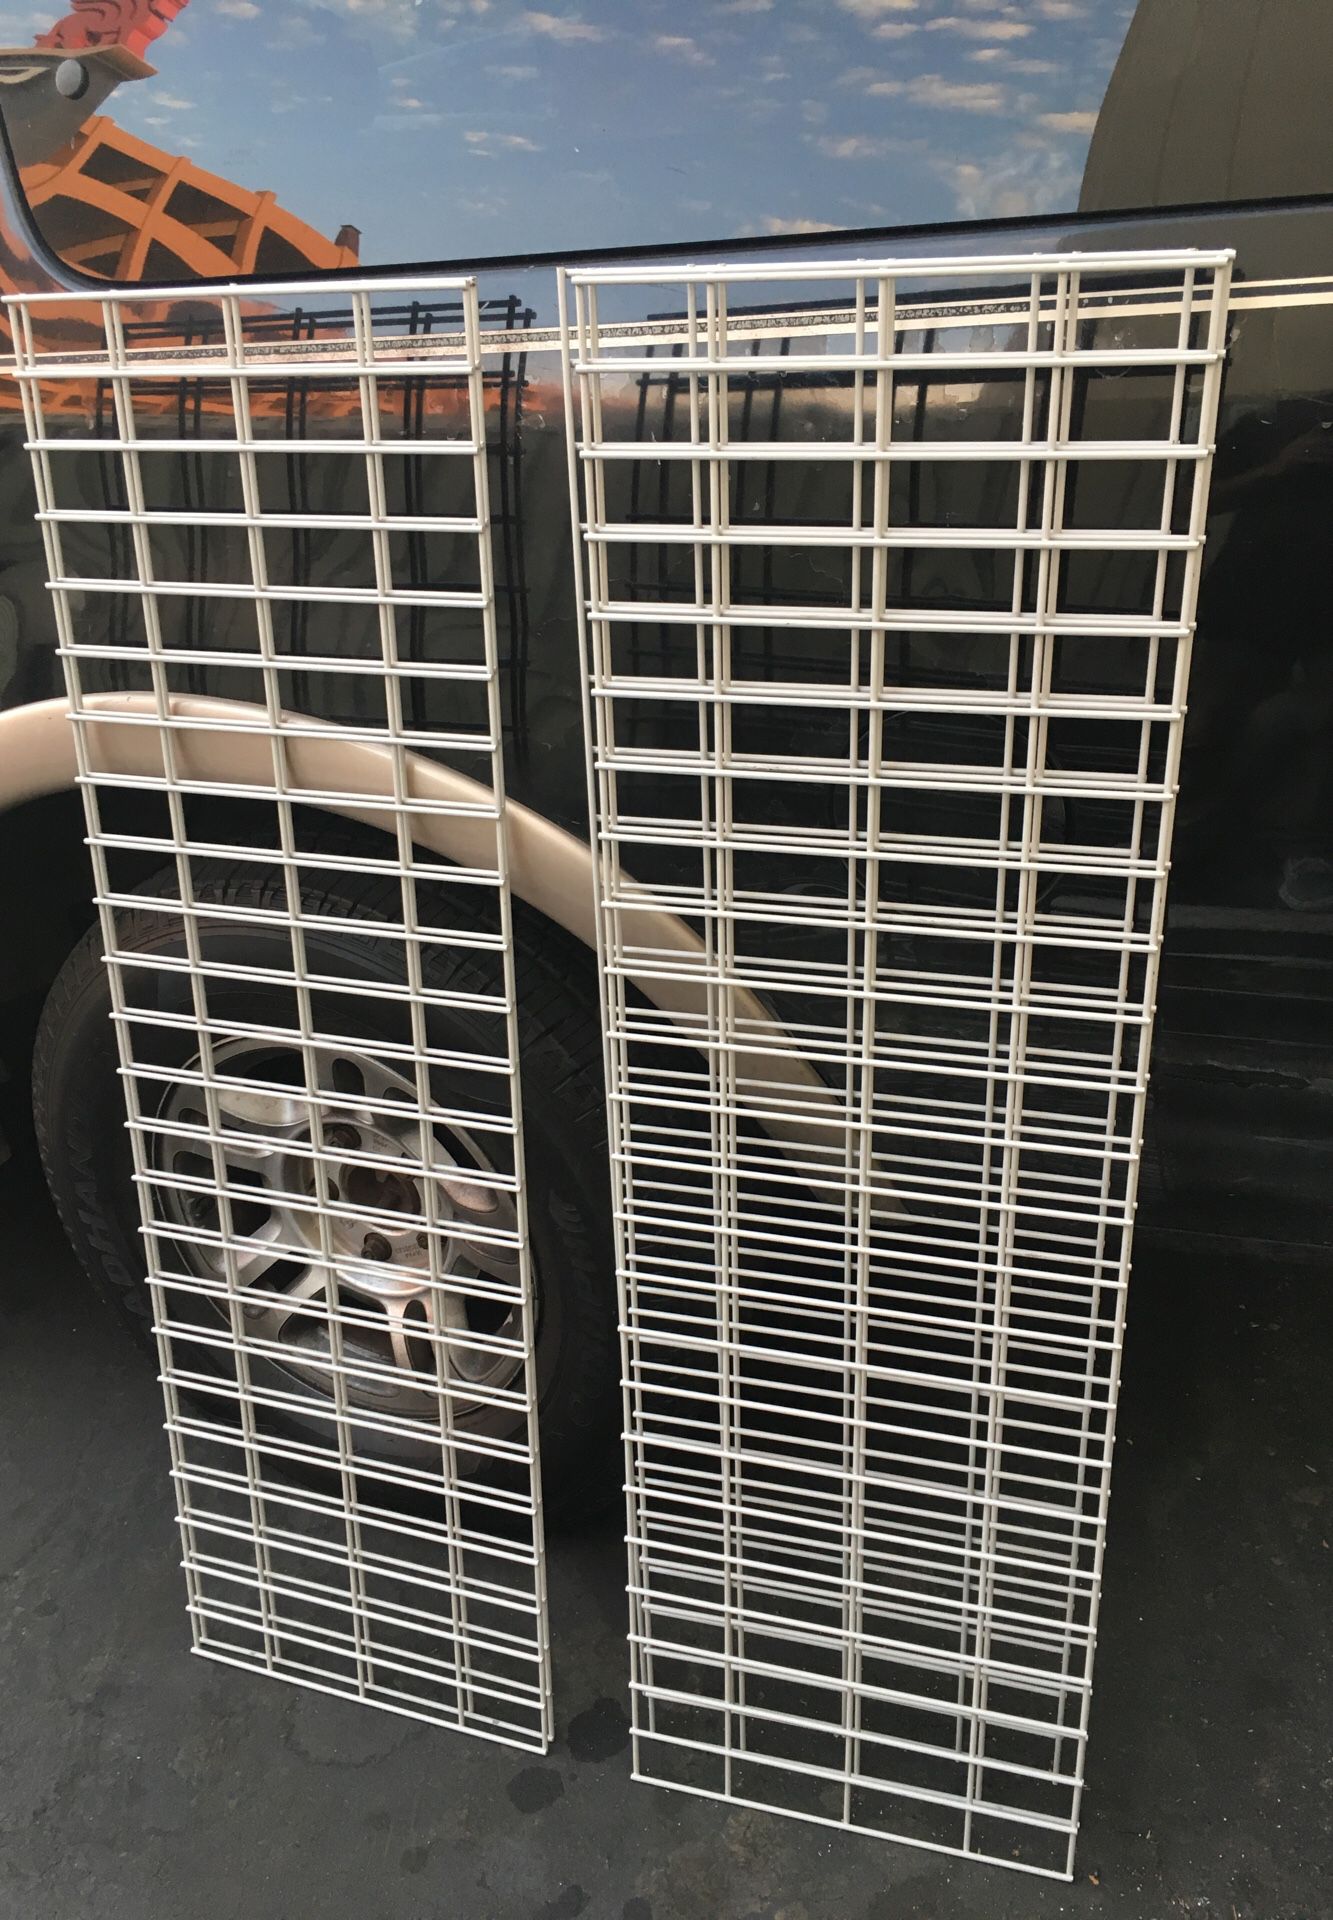 Shelves. Metal racks. 3’11” X 13 1/2”